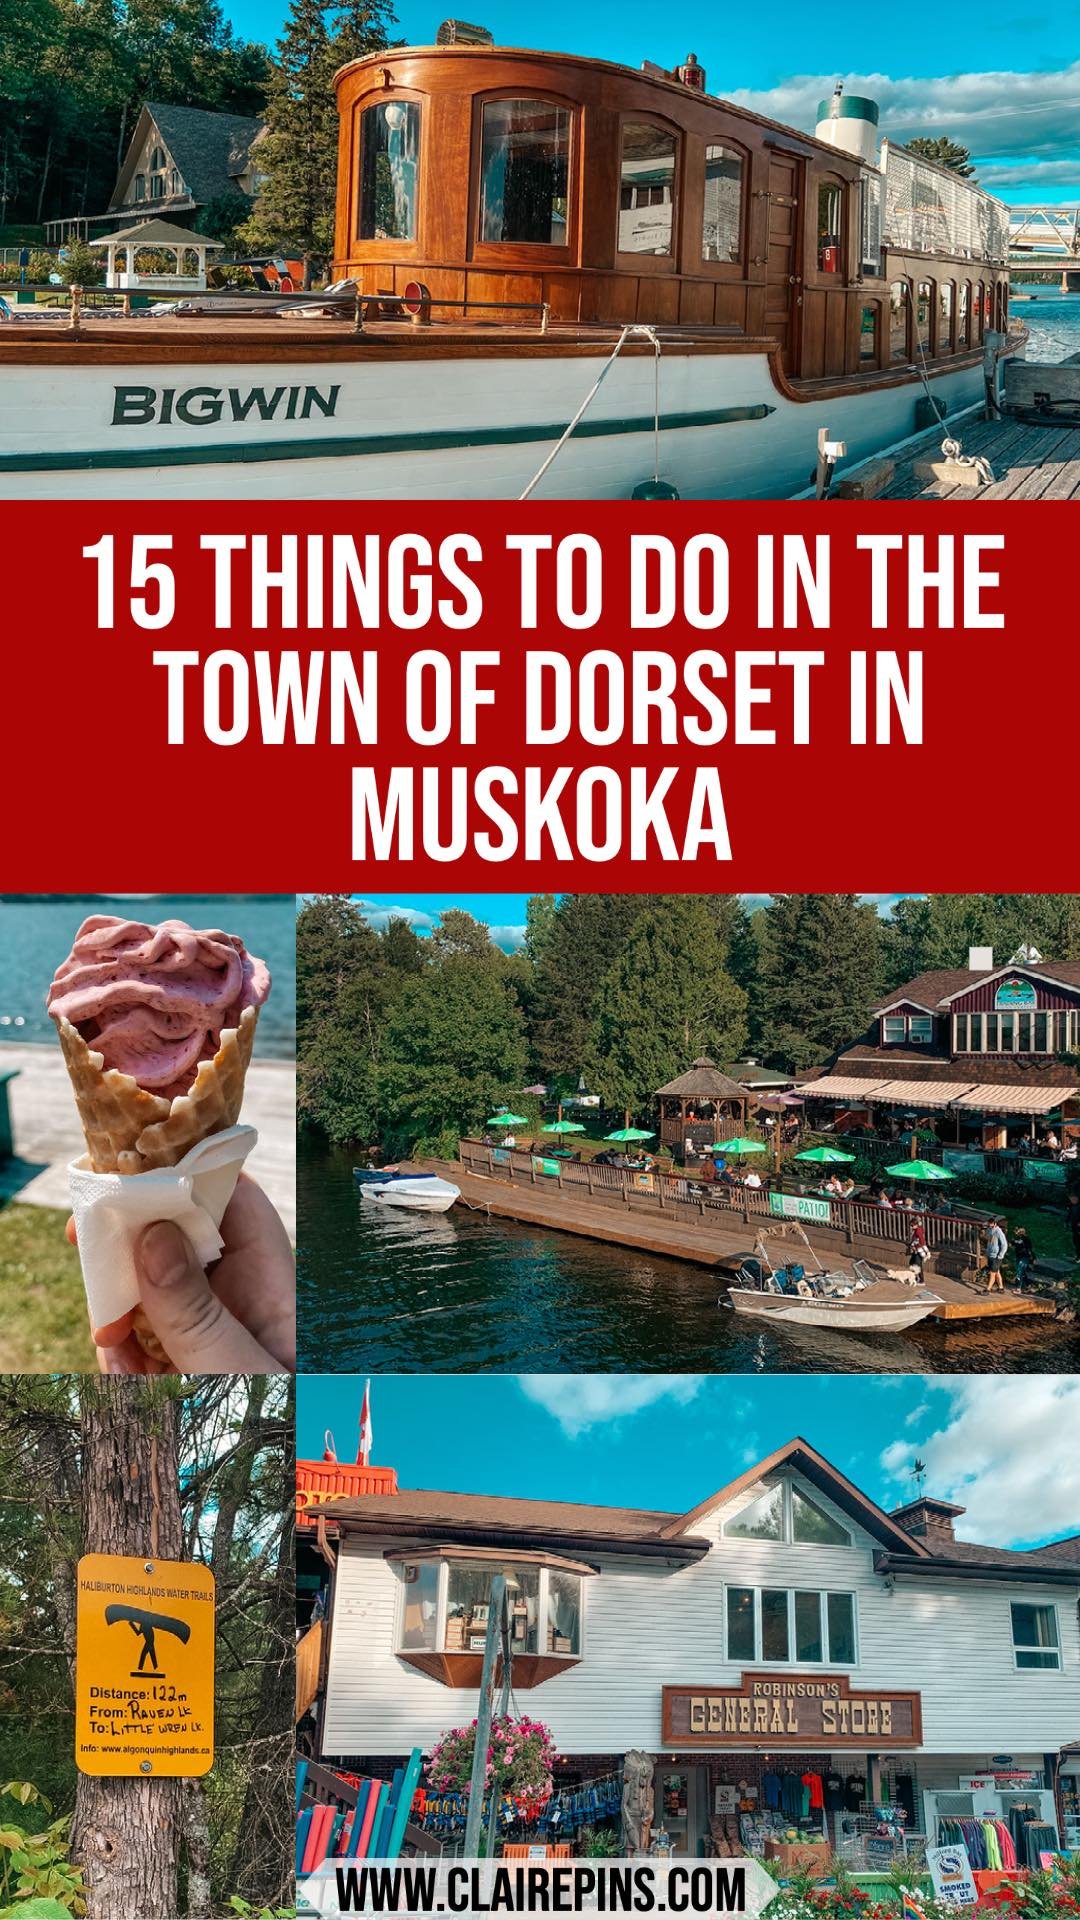 15 Fun things to in Dorset Muskoka travel guide.jpg